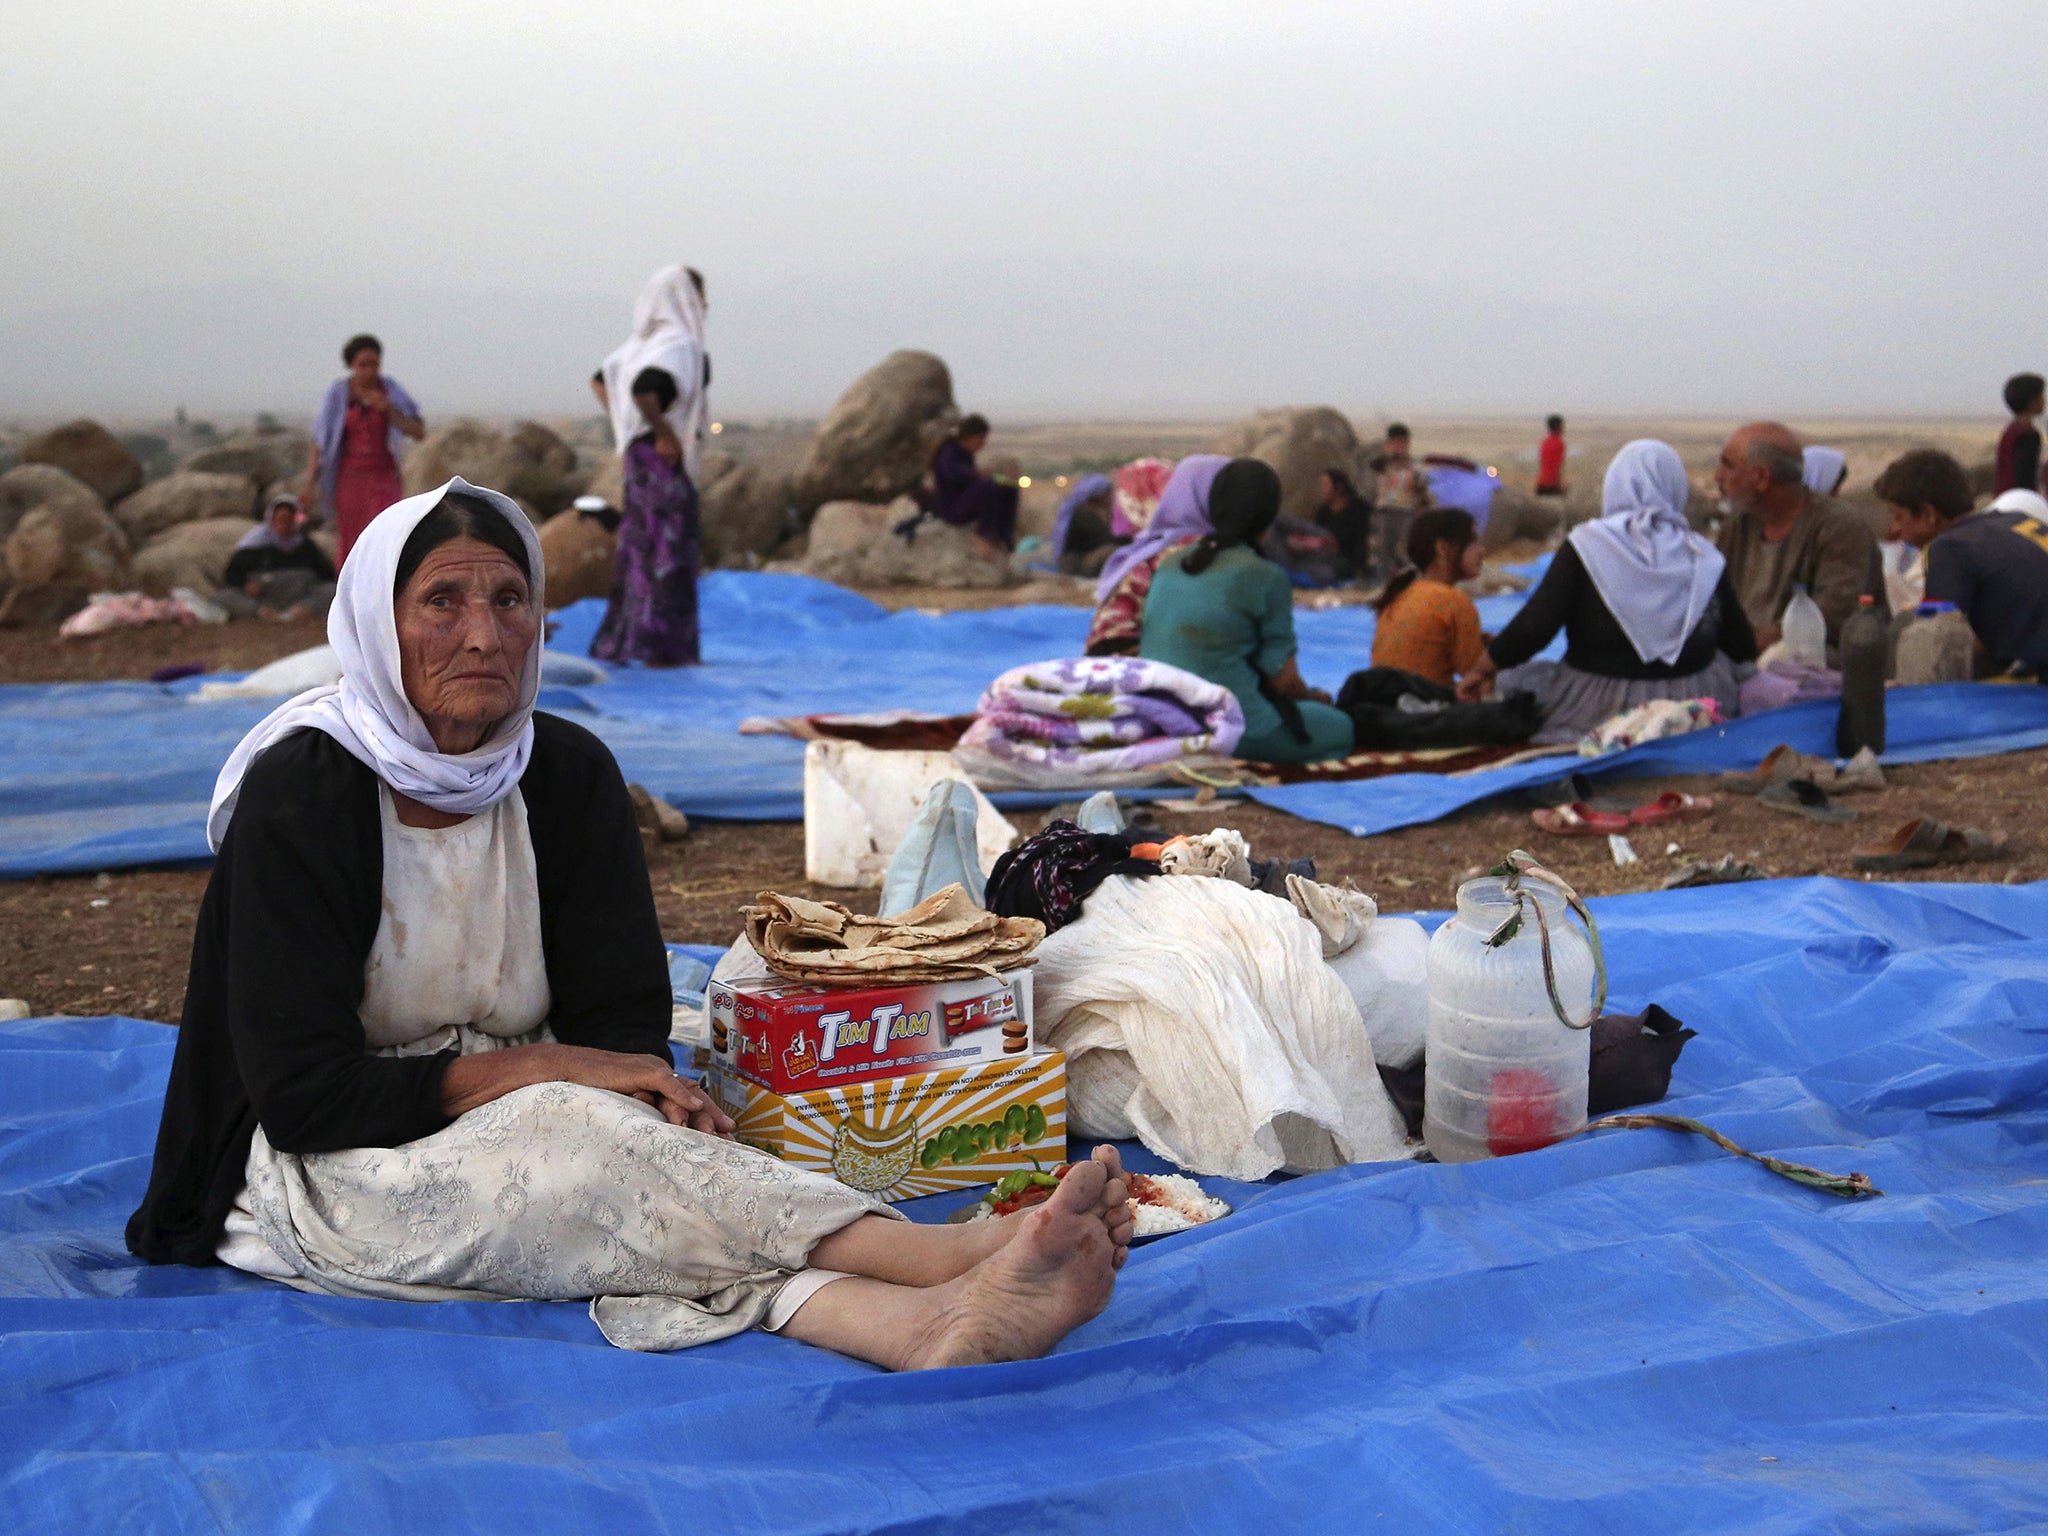 Daily Life of Yazidi Refugees by K.J. Wetherholt